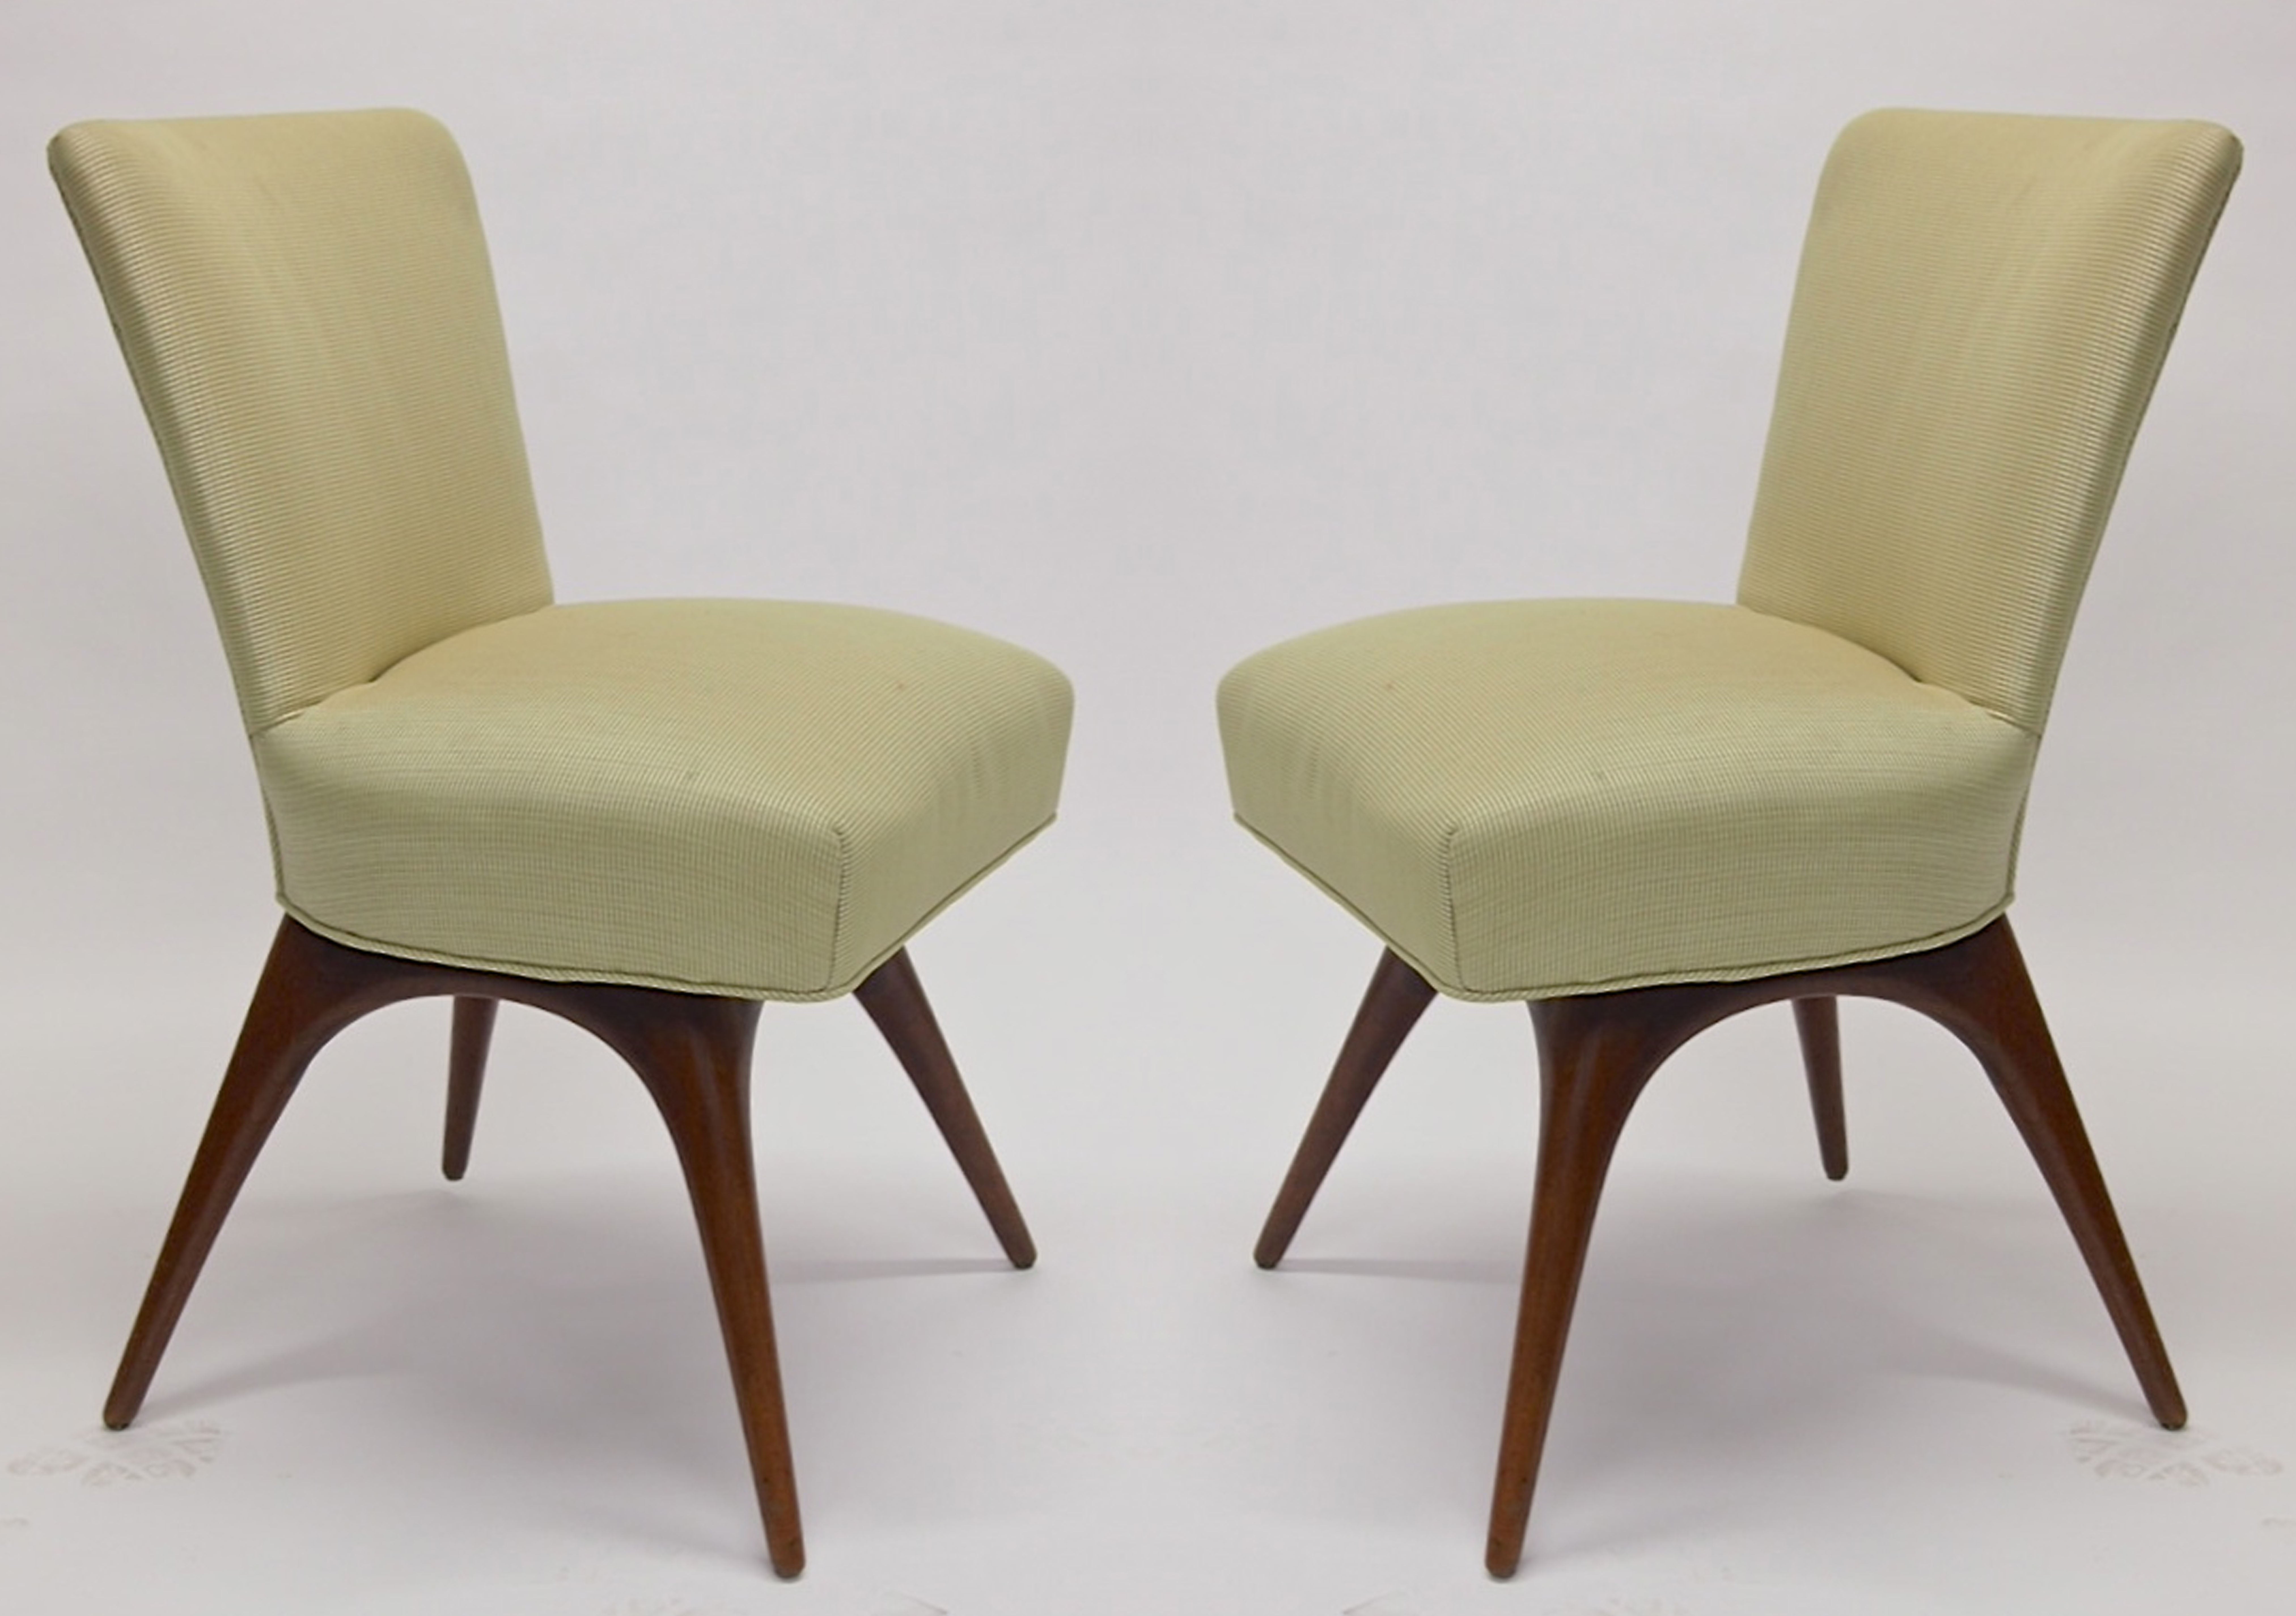 Pair of Chairs by Vladimir Kagan for Dryfis circa1950 American